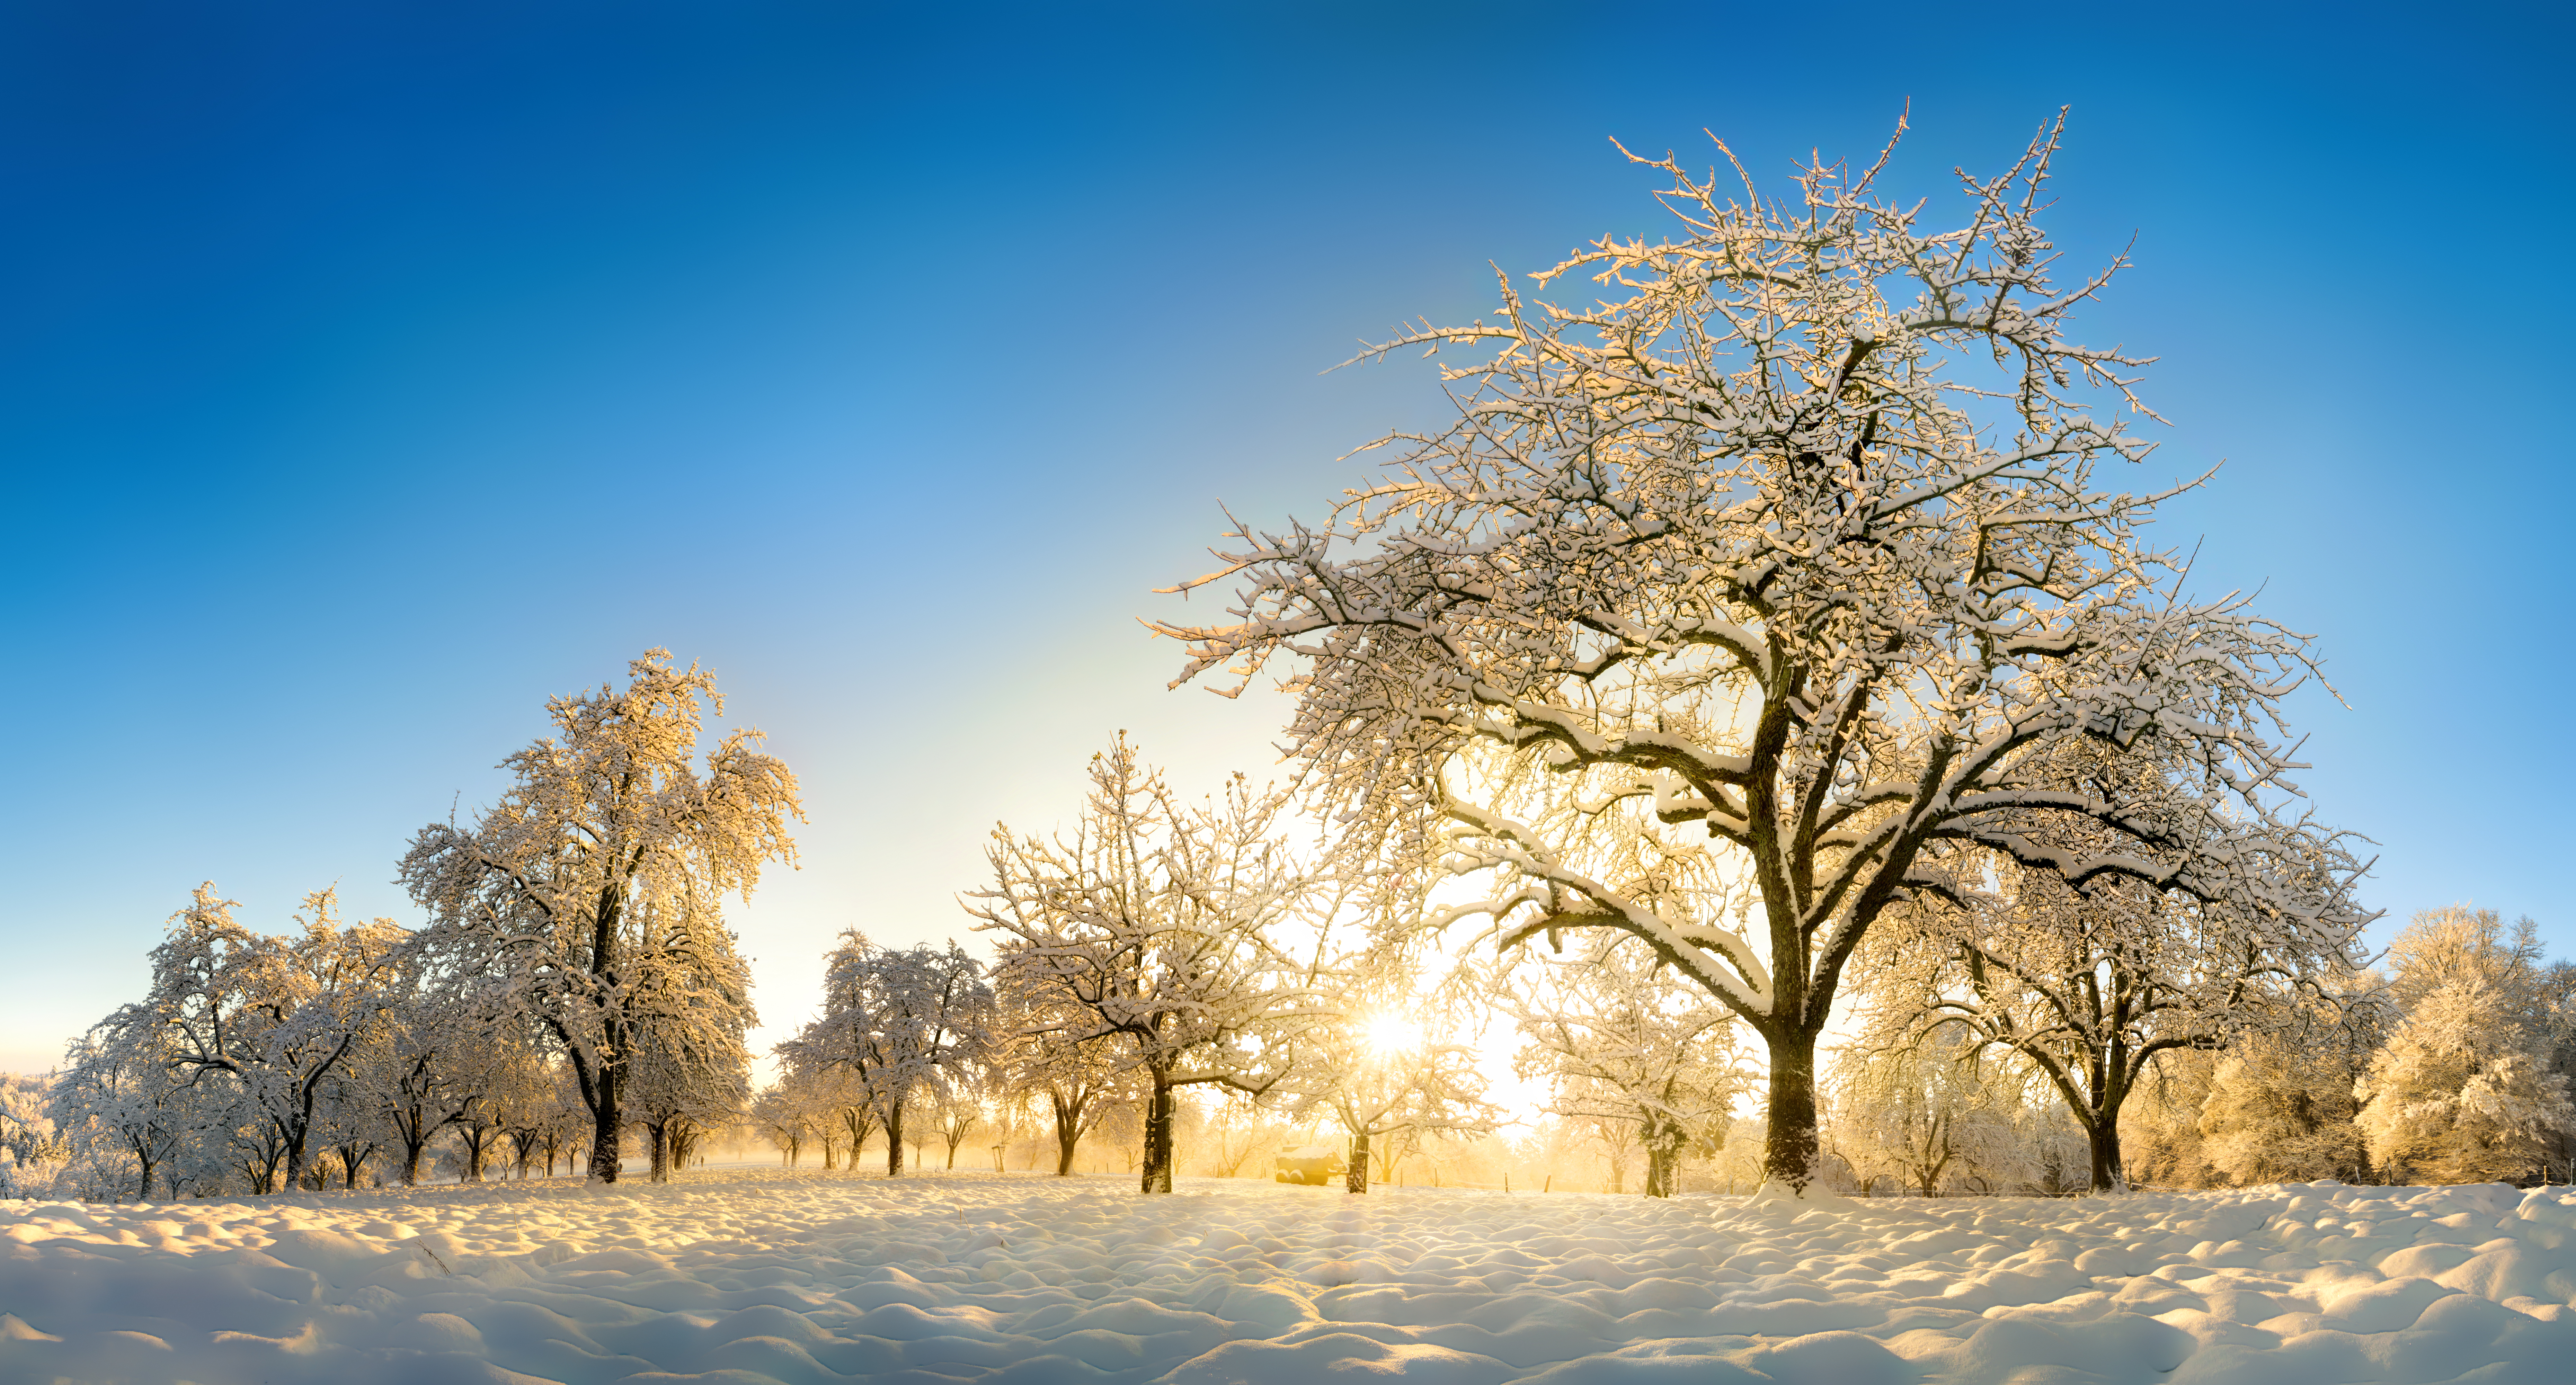 Winter scene of snow-covered trees